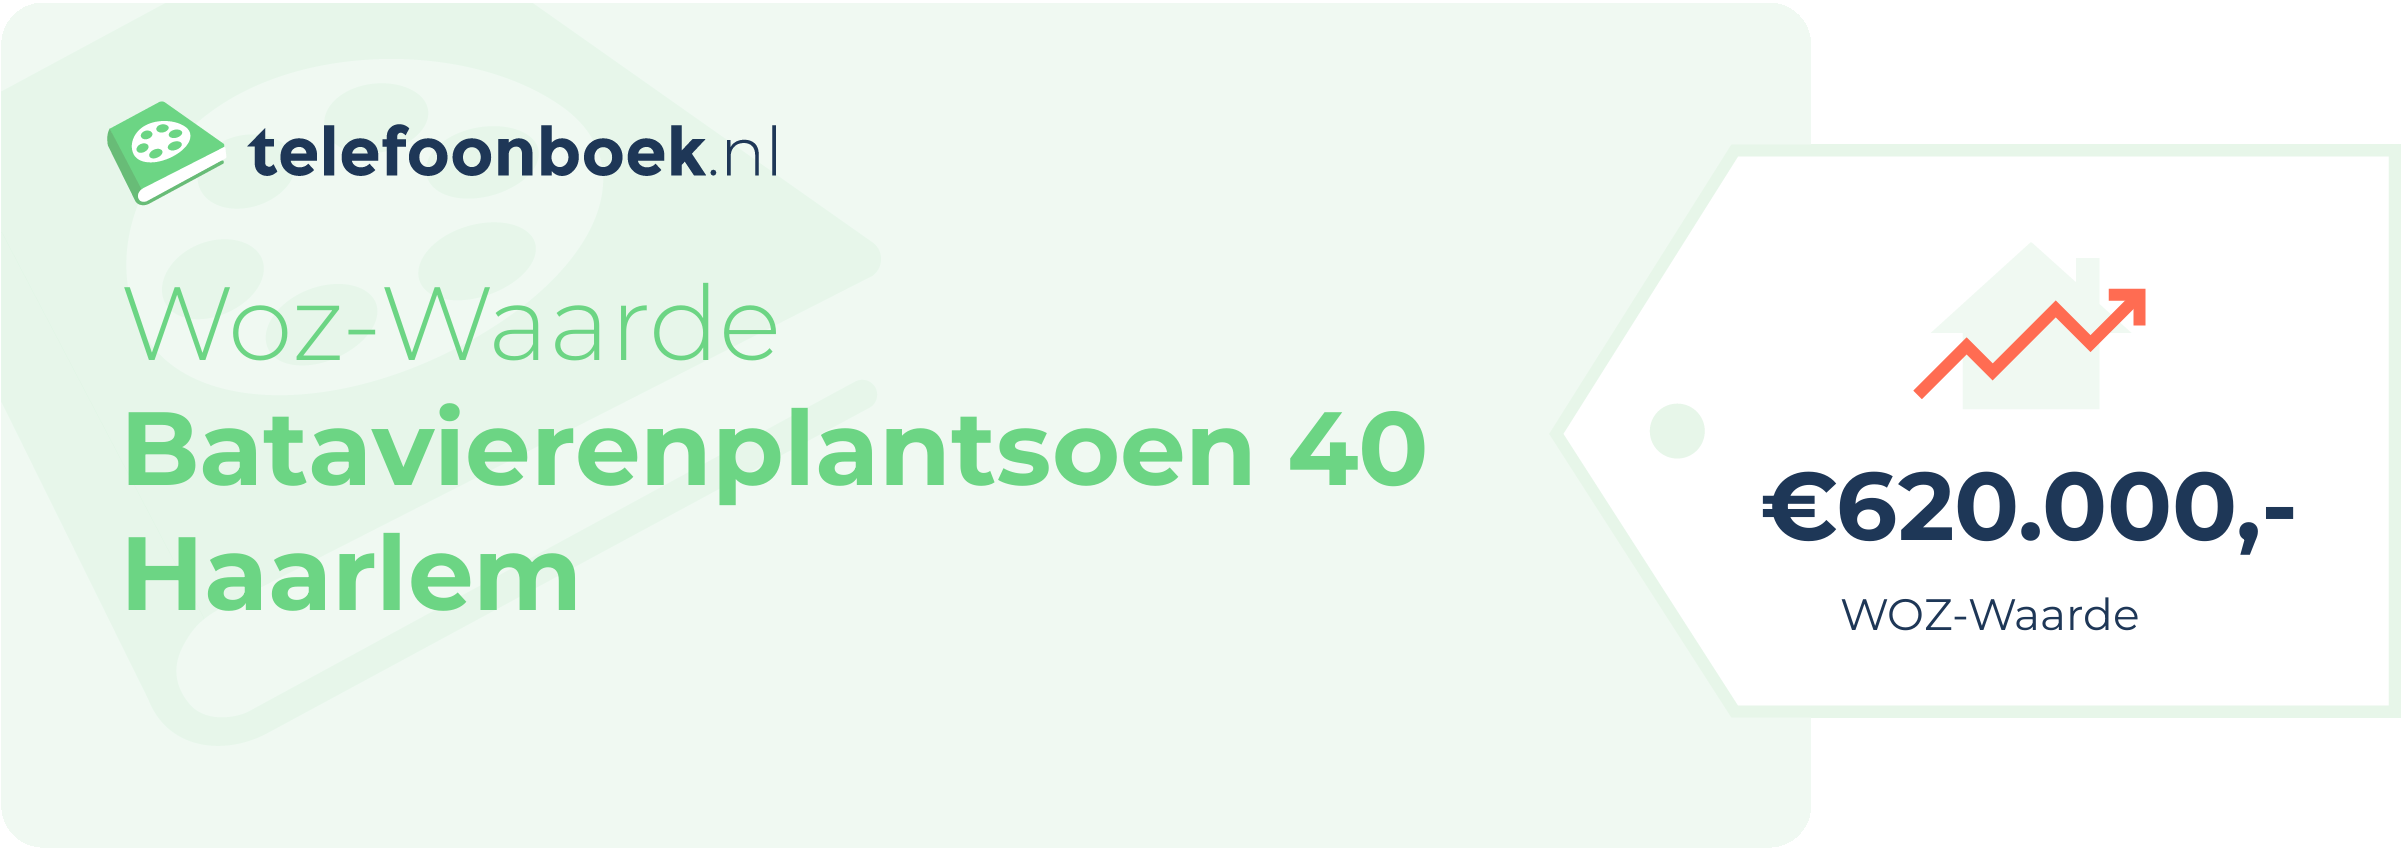 WOZ-waarde Batavierenplantsoen 40 Haarlem